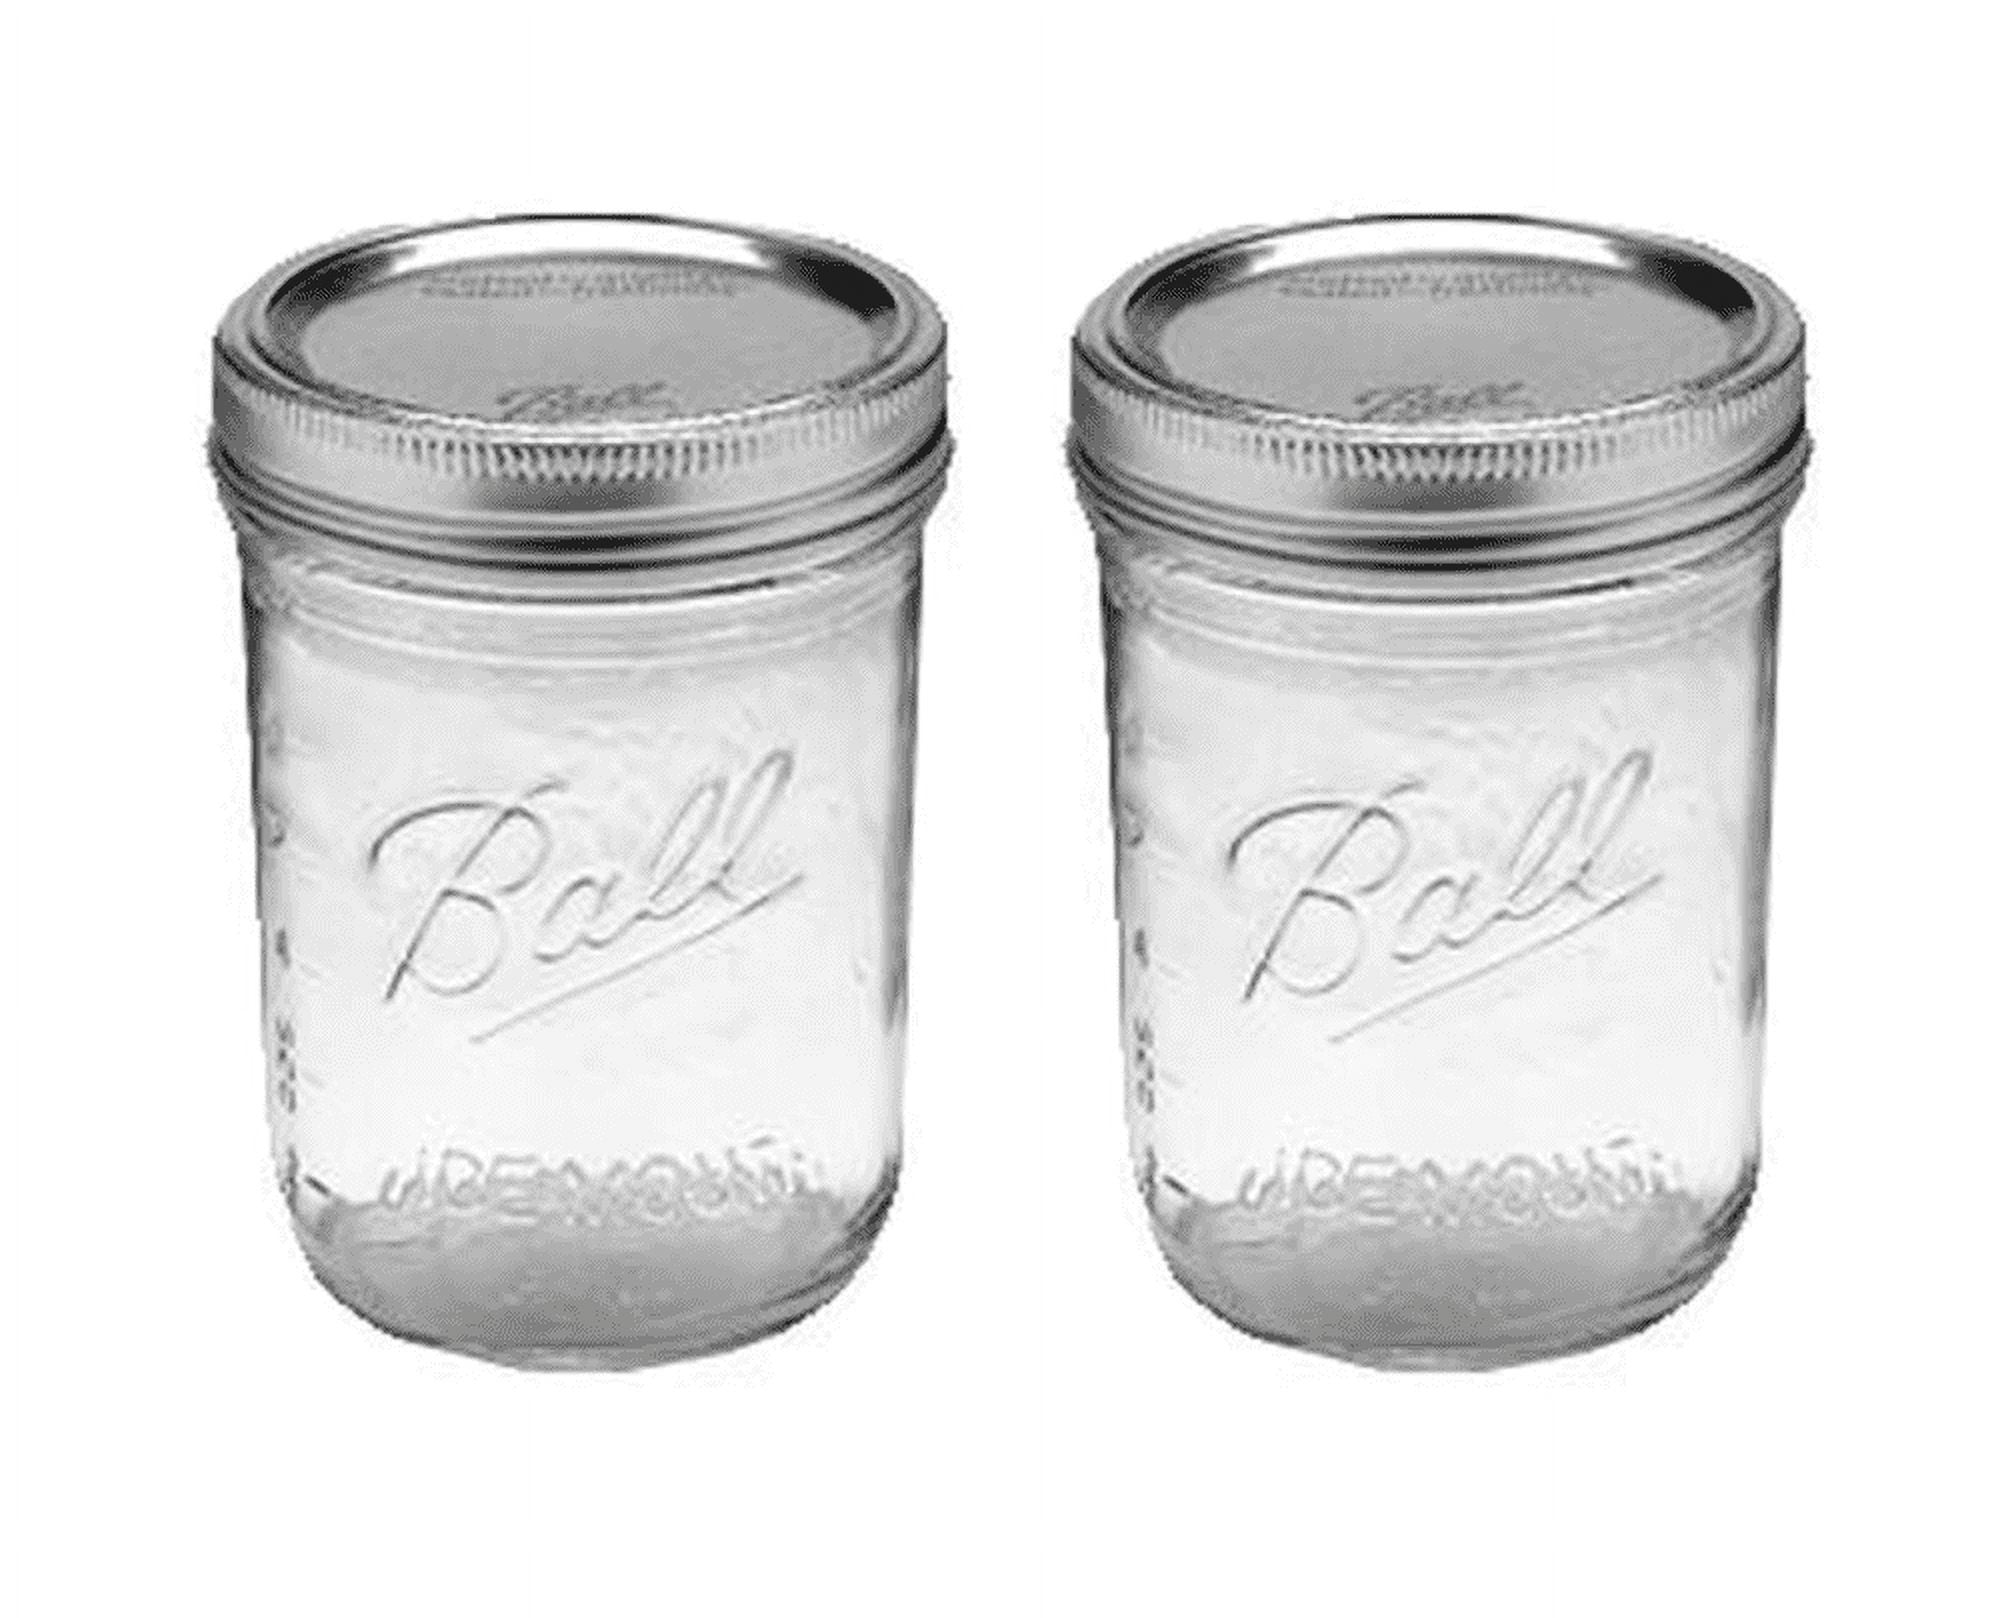 Ball® Mason Jar - Clear, 16 fl oz - City Market